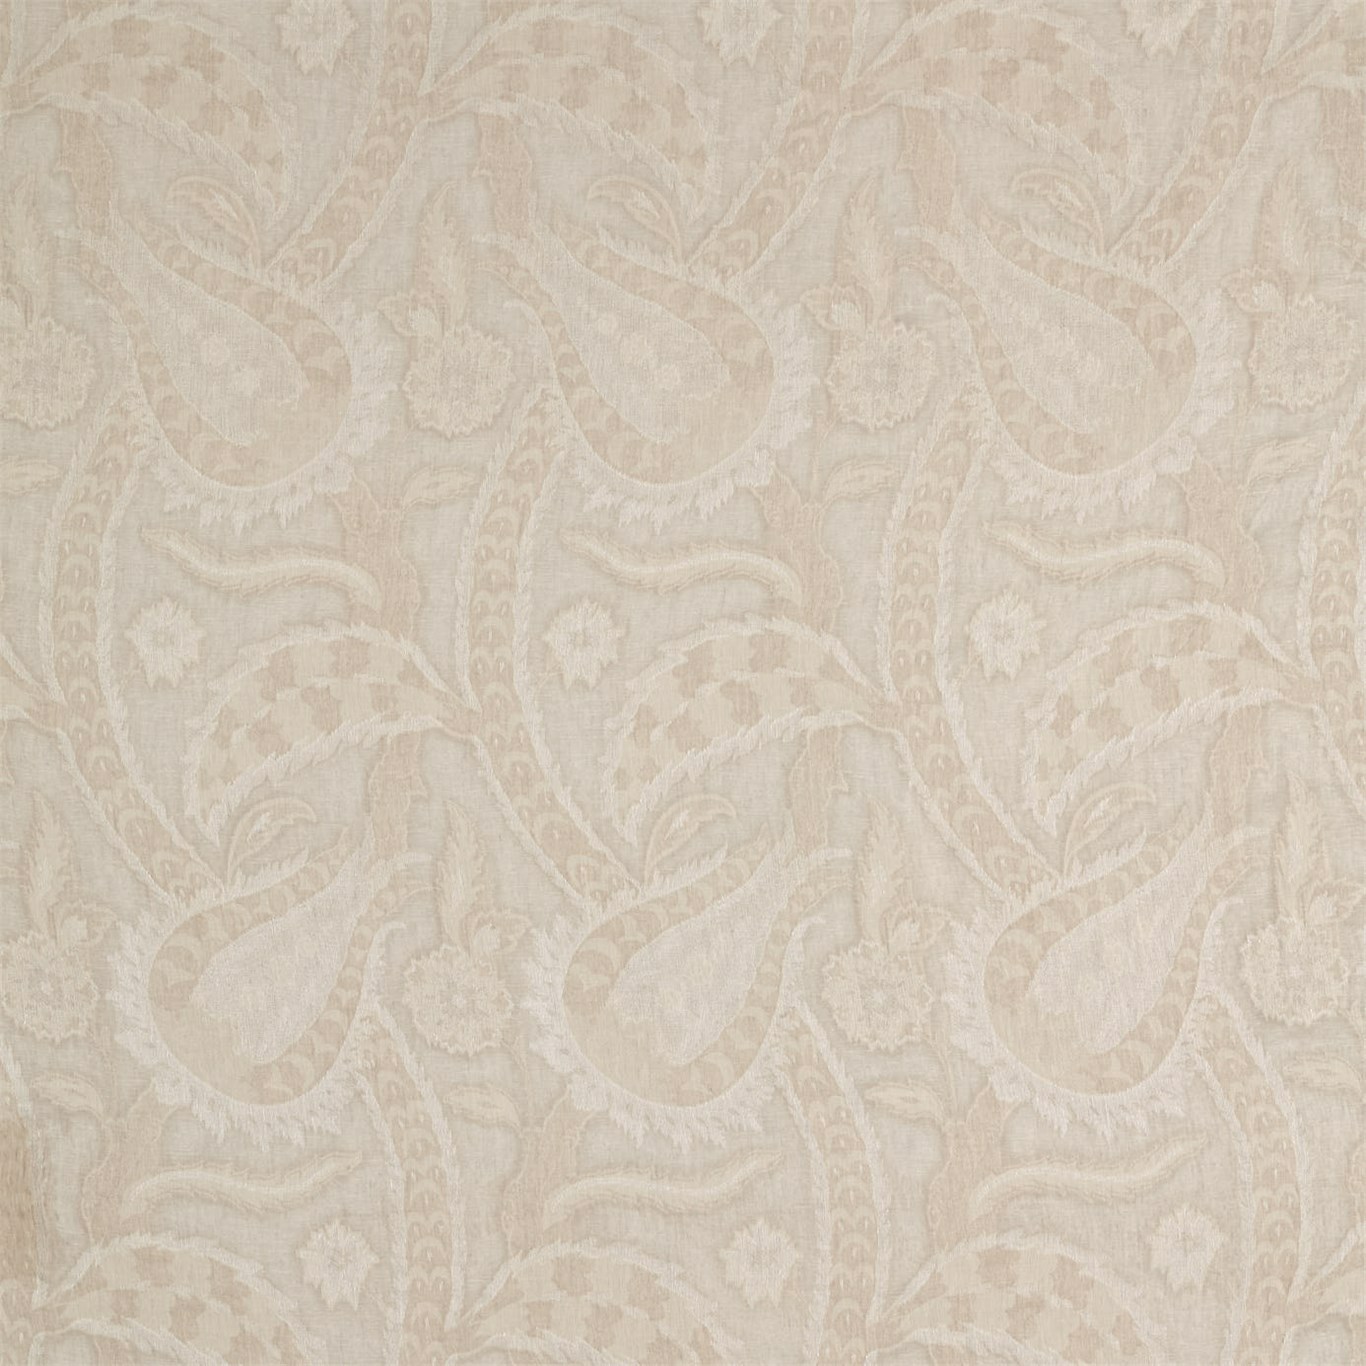 Oberon Linen Fabric by ZOF